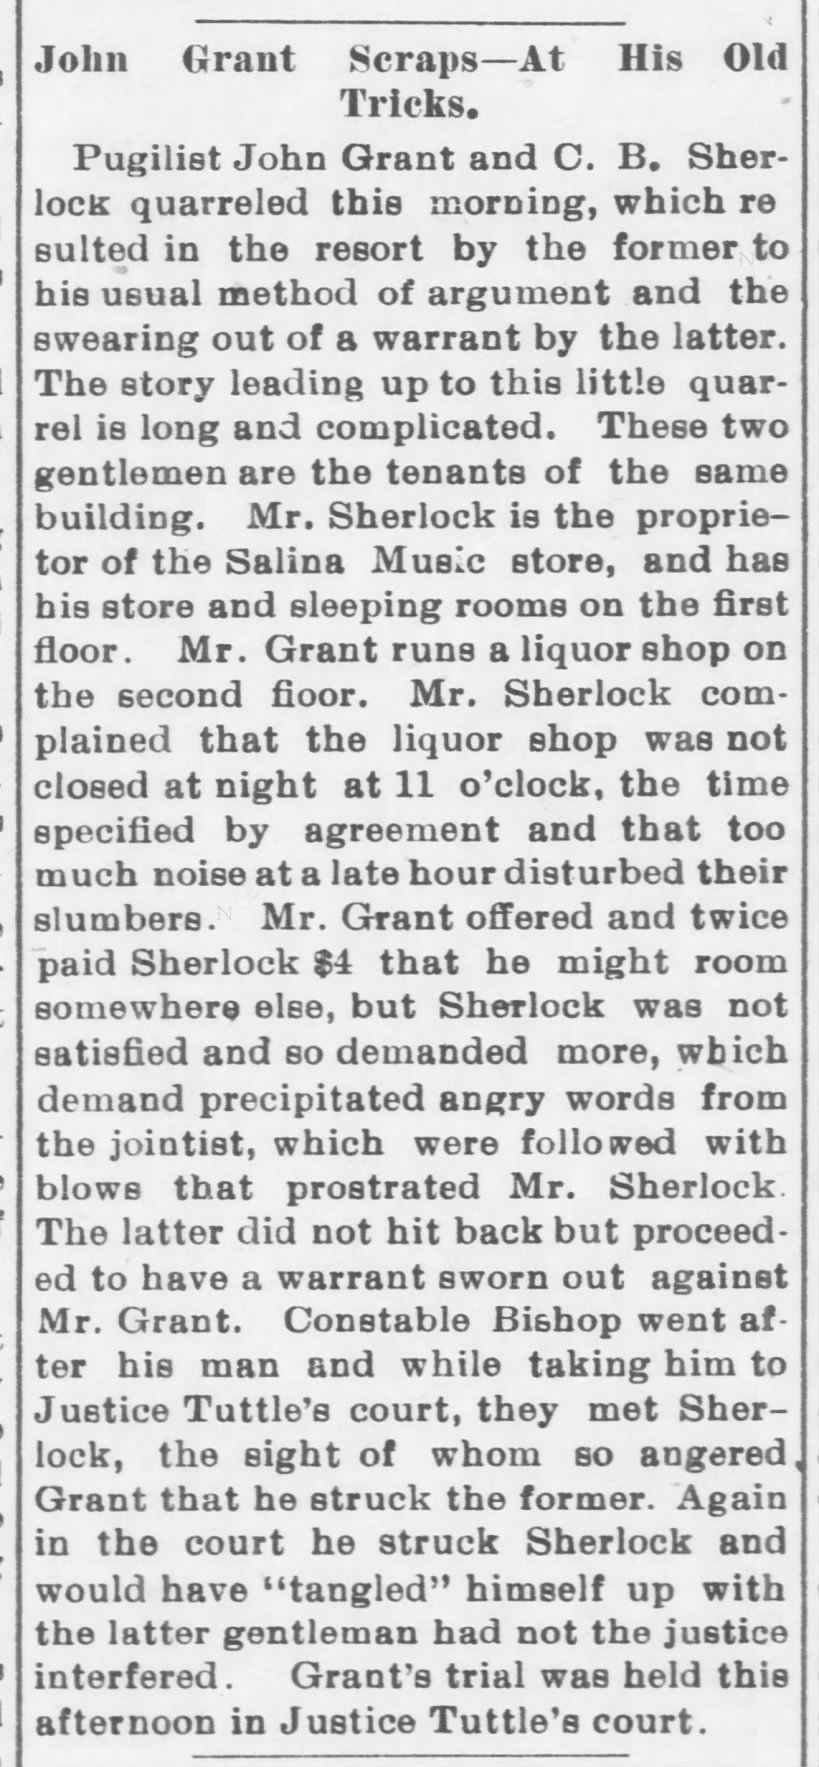 C.B. Sherlock assaulted by Grant